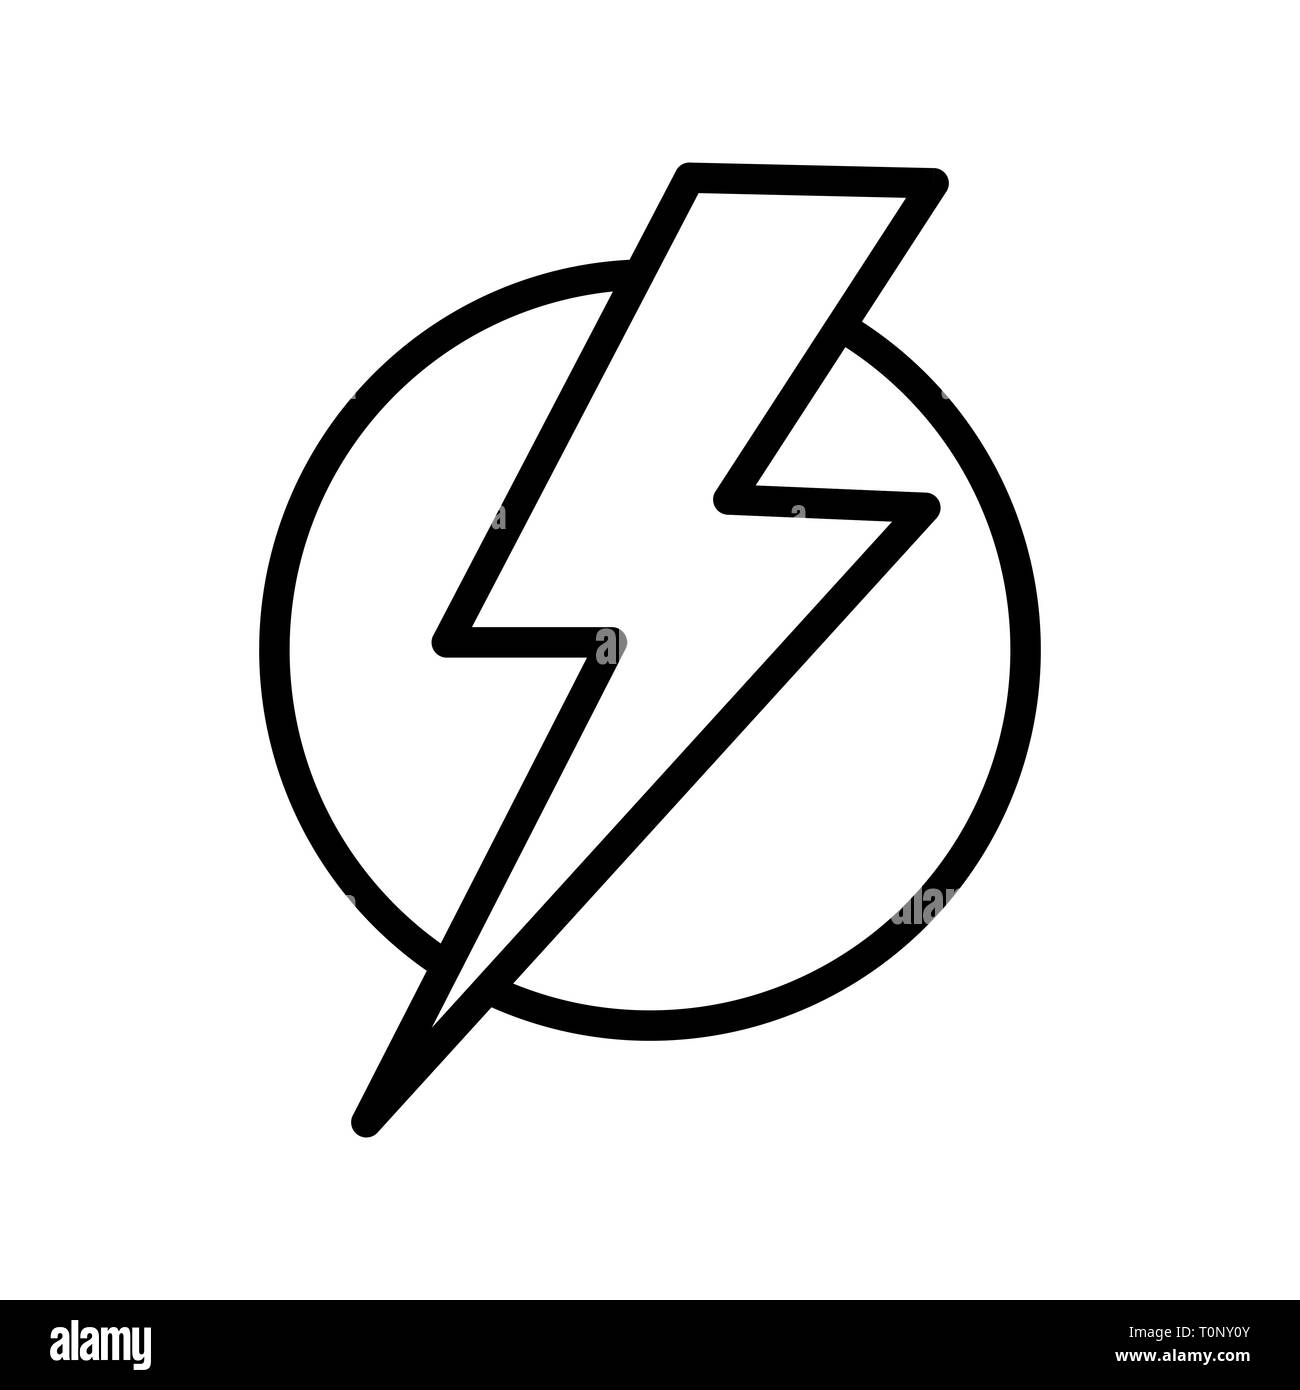 Illustration Electric Shock Icon Stock Photo